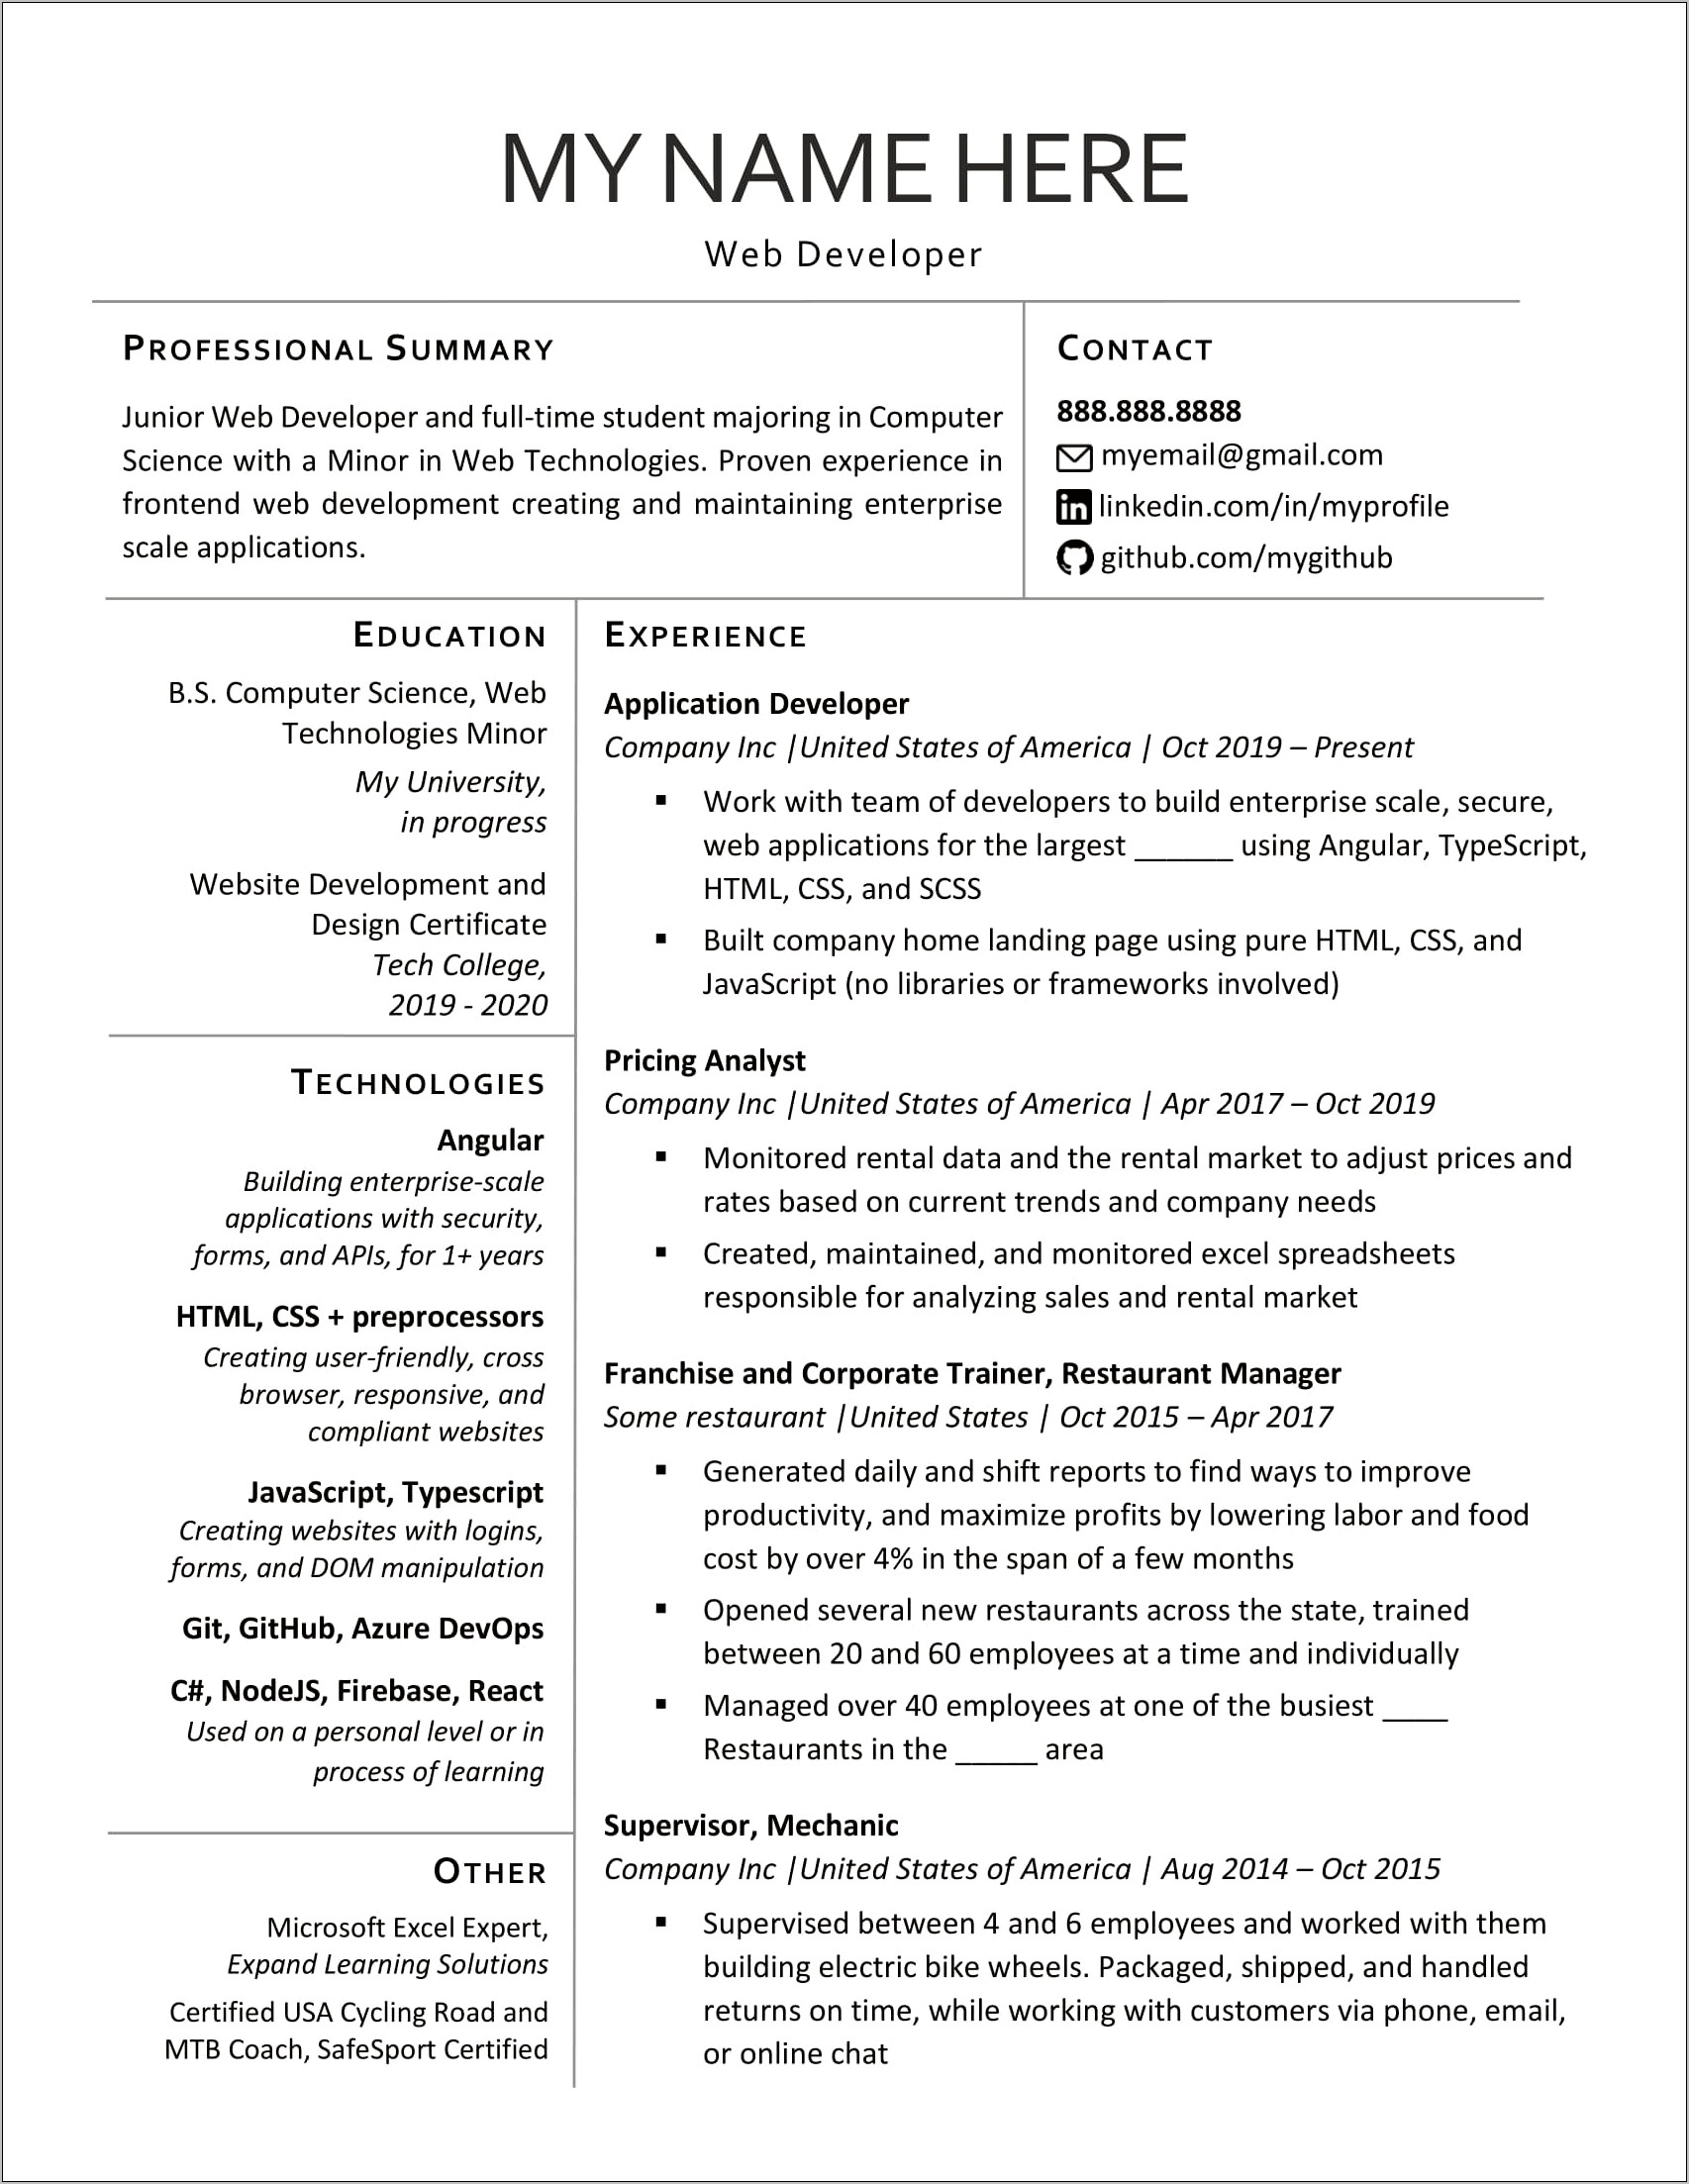 Resume Information Computer Science Jobs Reddit